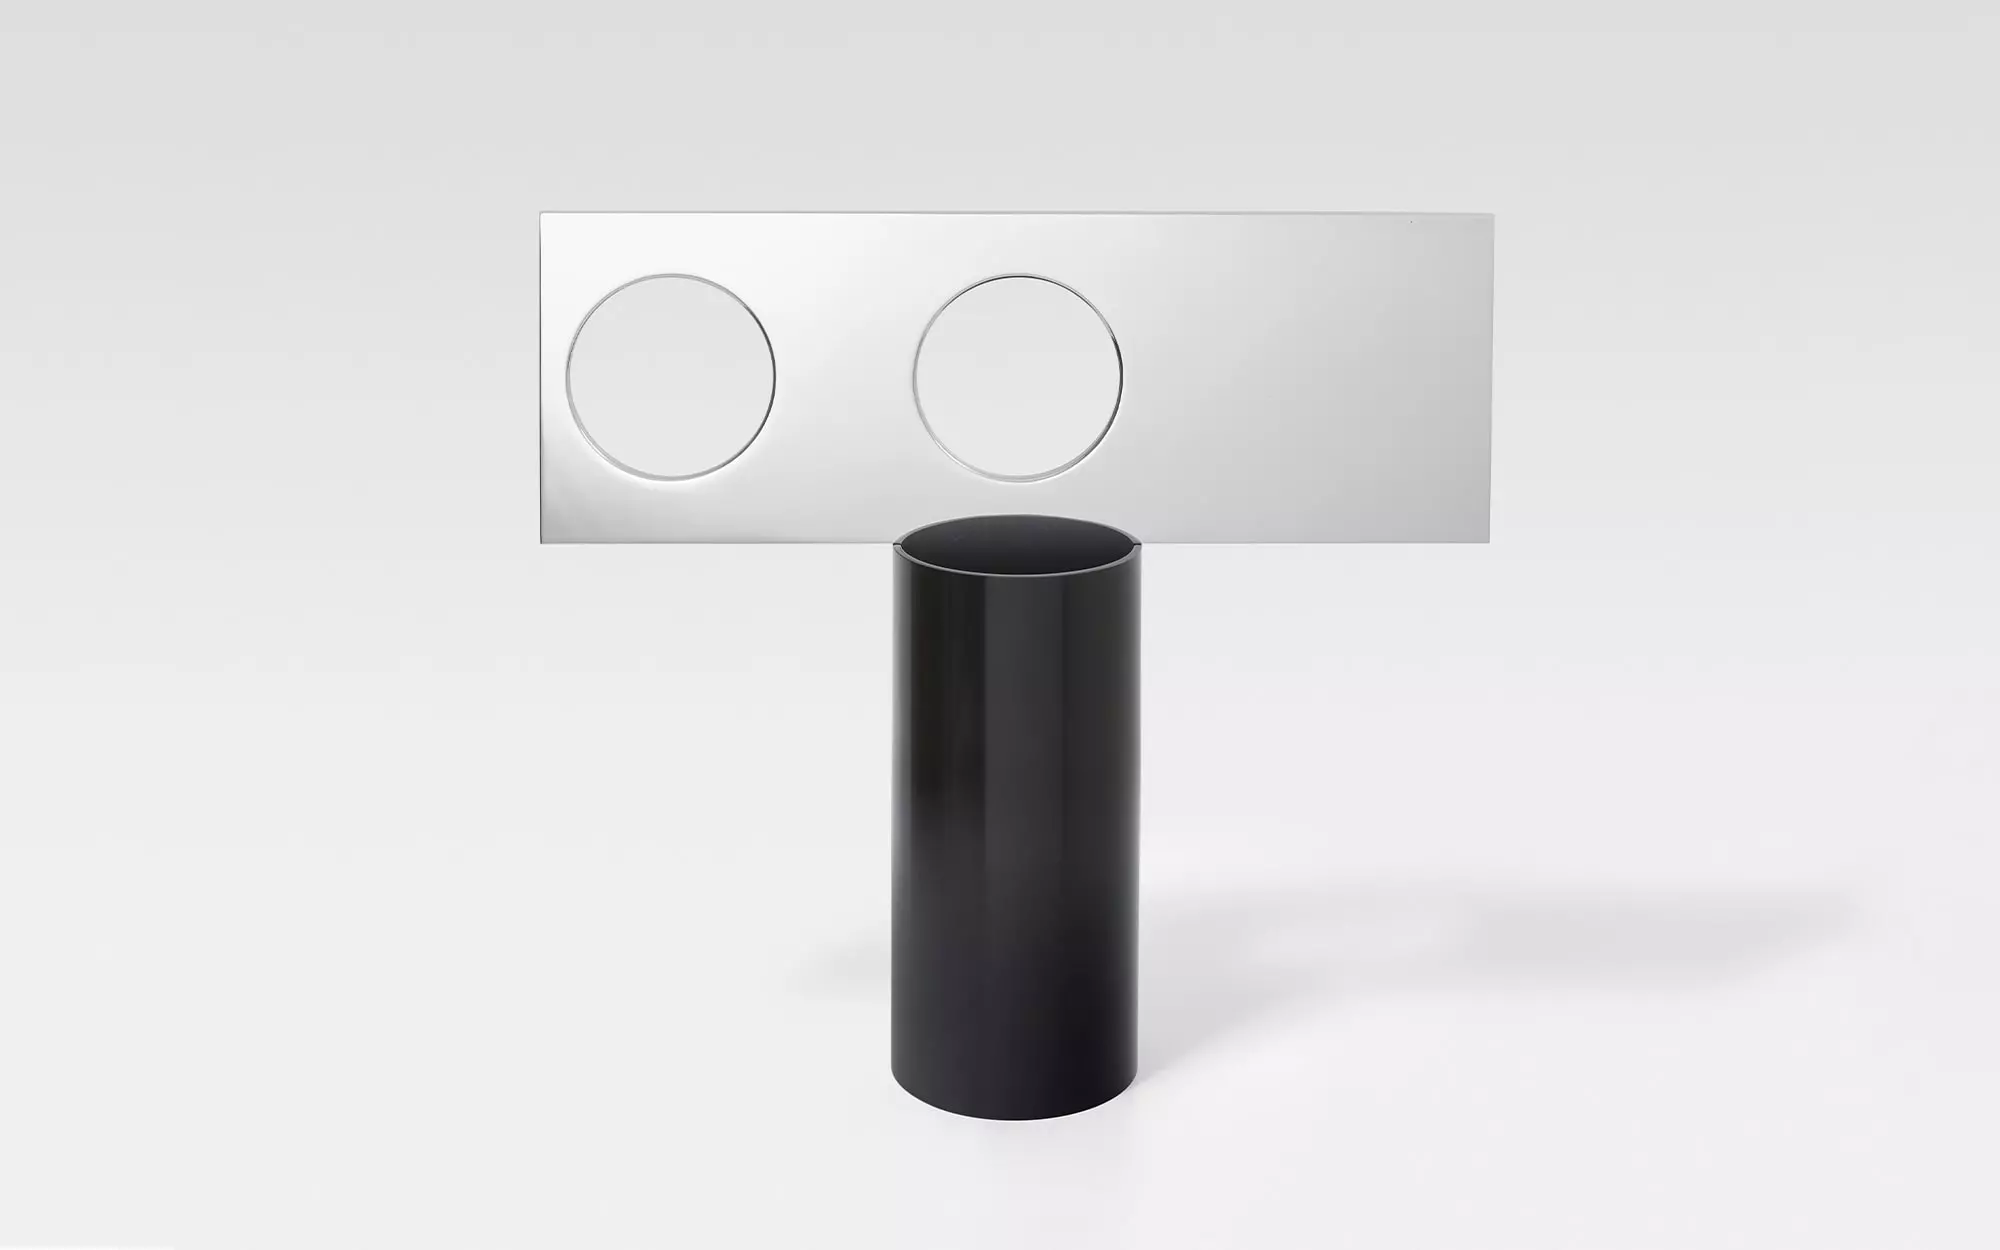 Lunettes - 3 Vase - Pierre Charpin - Desk - Galerie kreo